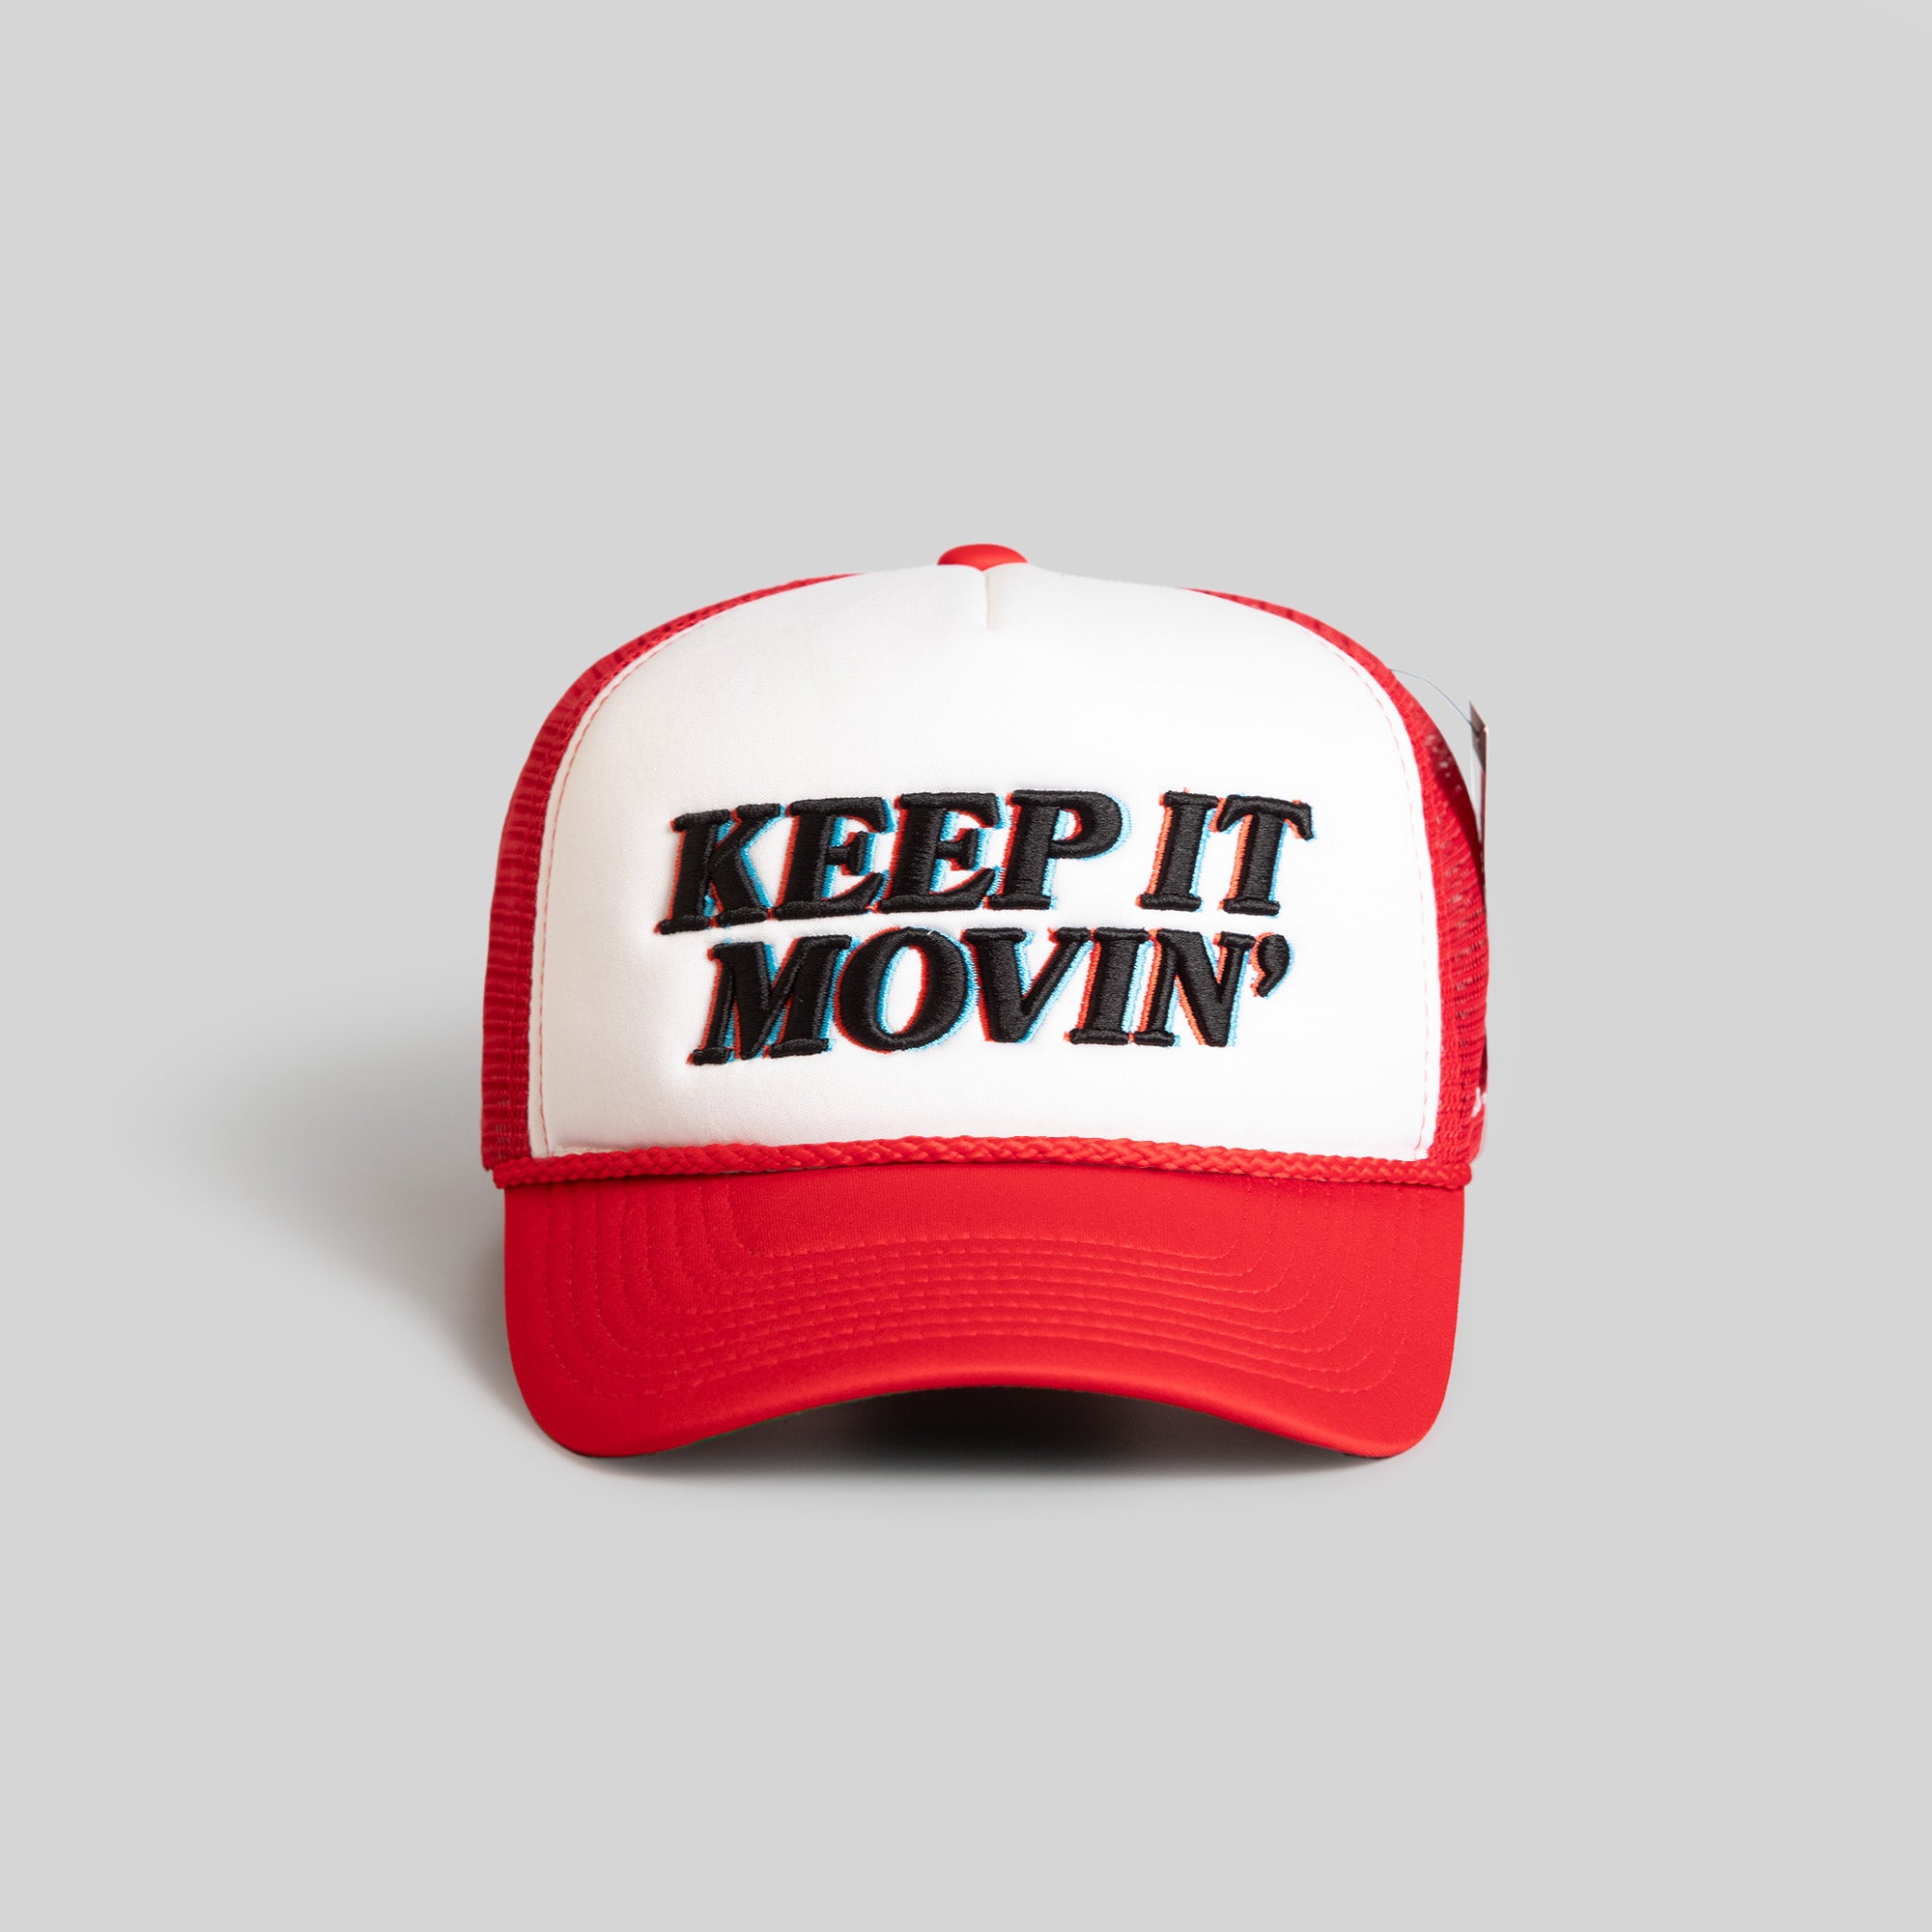 KEEP IT MOVIN' WHITE RED TRUCKER HAT